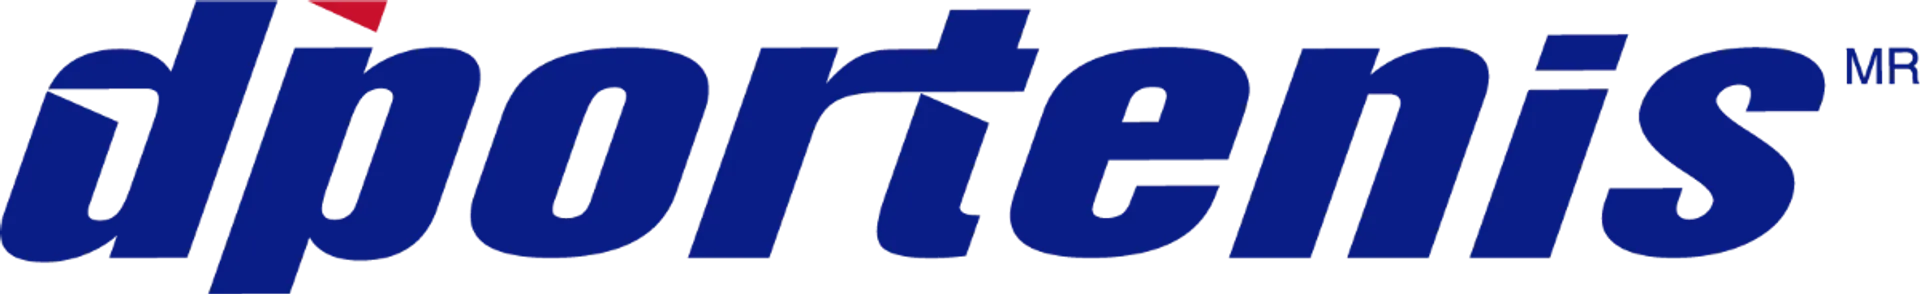 DPORTENIS logo